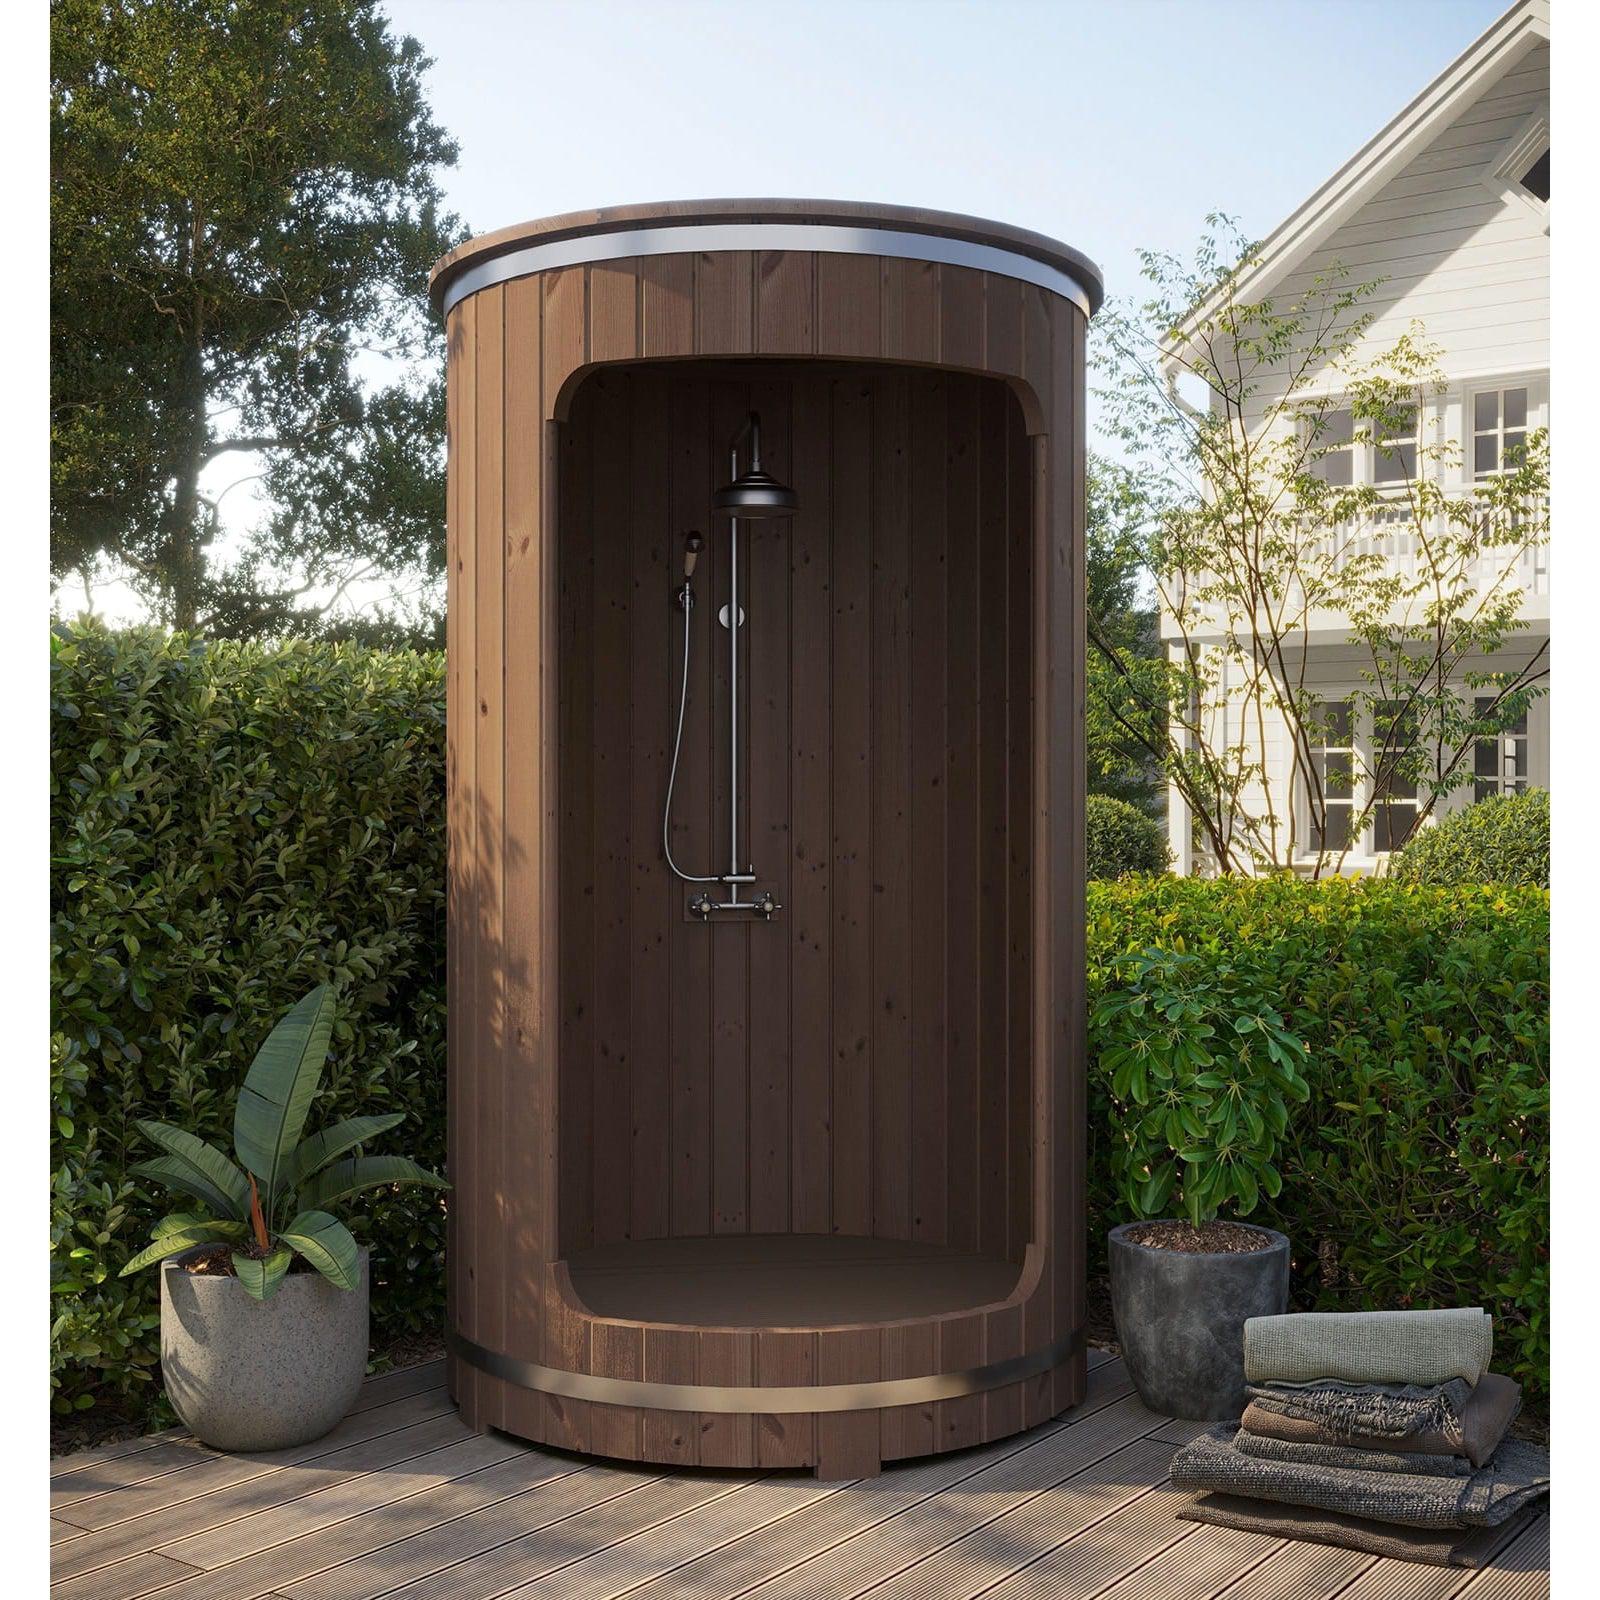 SaunaLife Barrel Shower Model R3 - Purely Relaxation